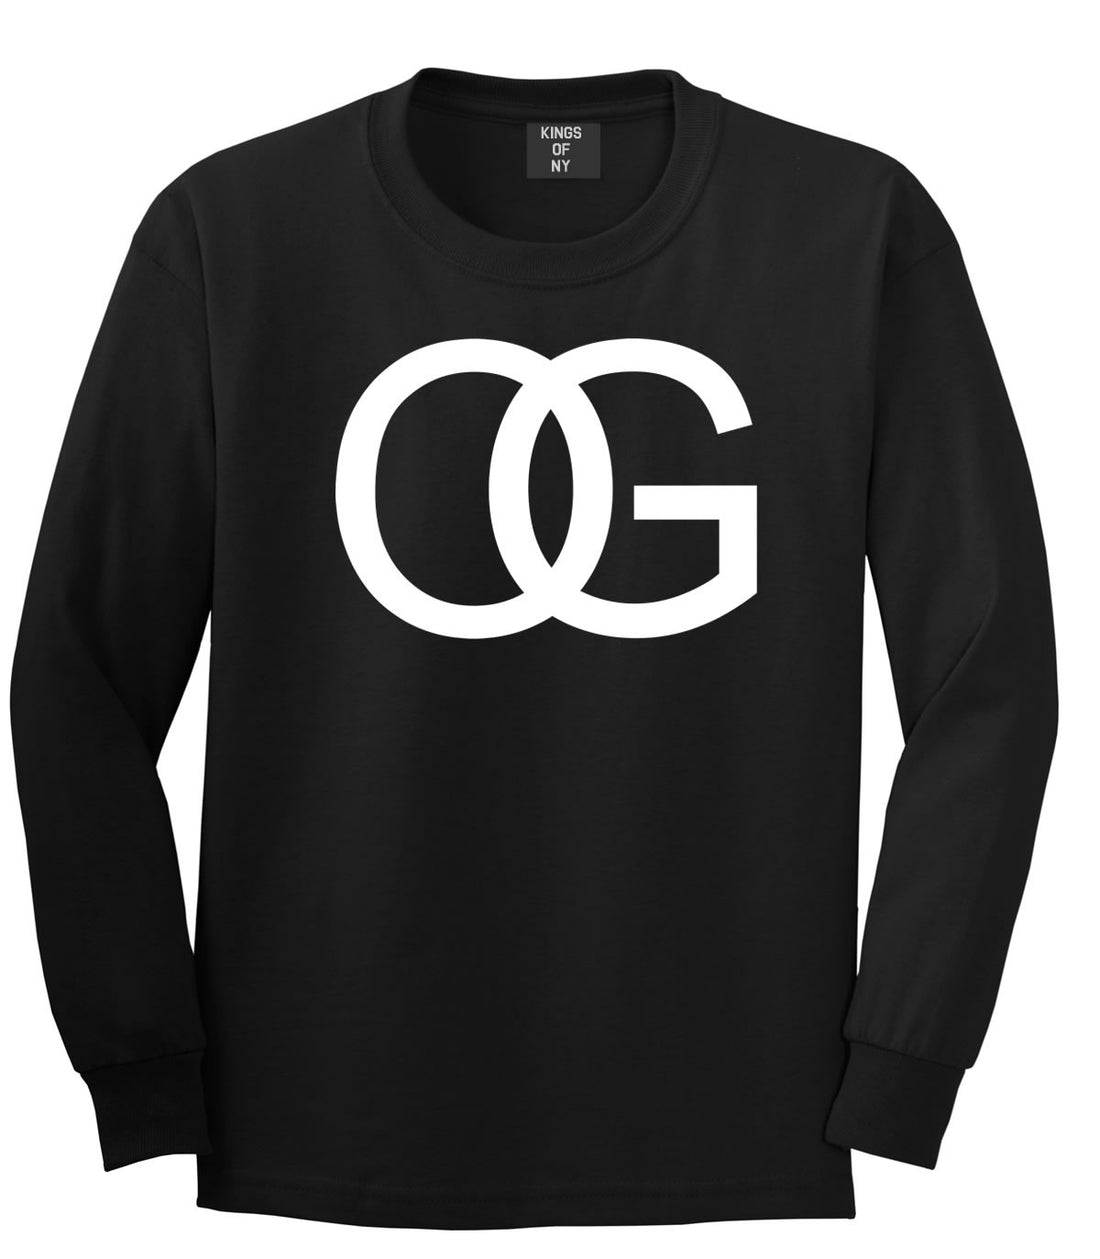 OG Original Gangsta Gangster Style Green Long Sleeve T-Shirt In Black by Kings Of NY